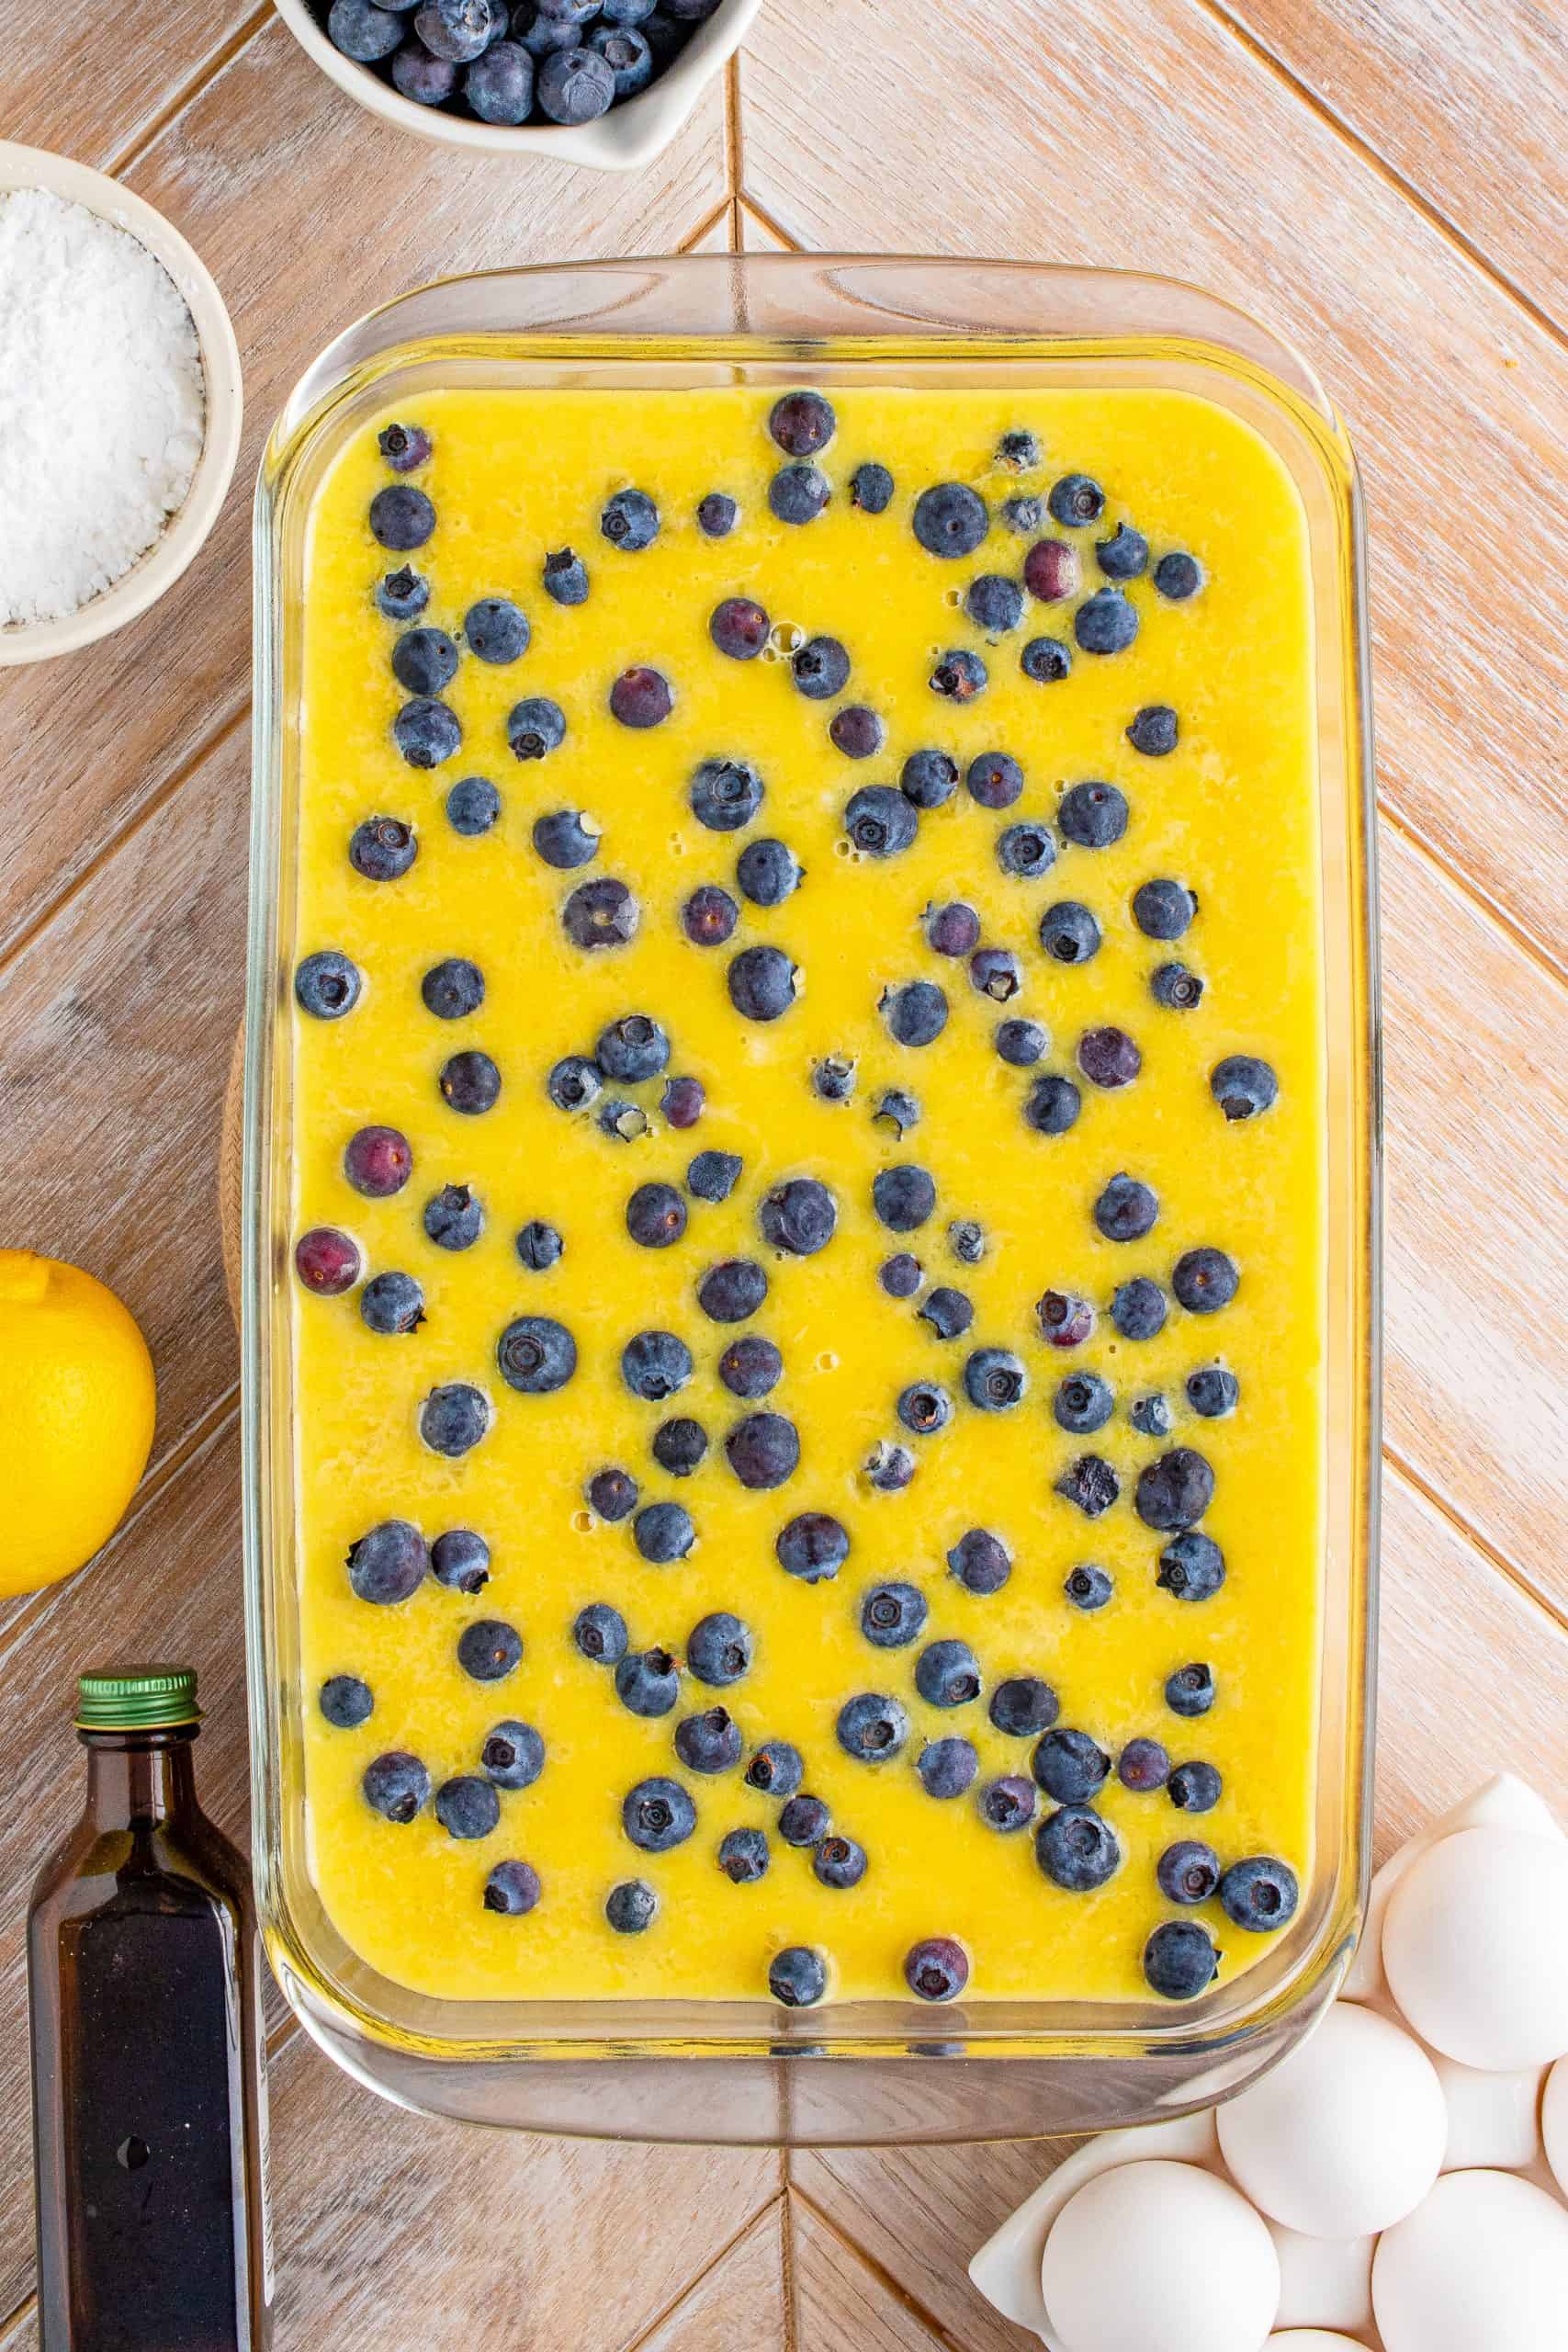 Blueberries sprinkled over filling mixture in baking pan.